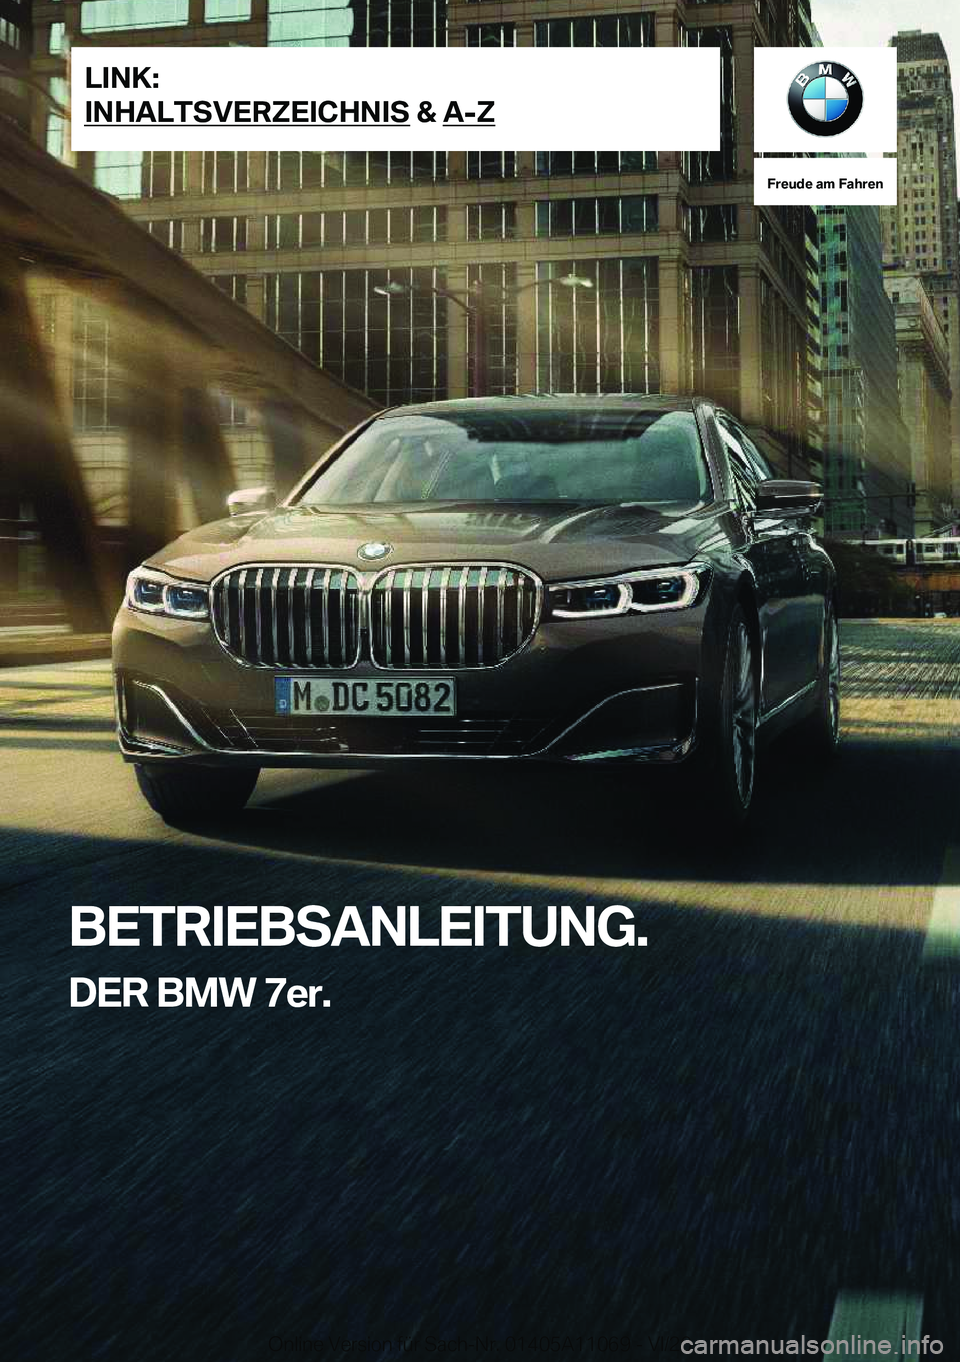 BMW 7 SERIES 2021  InstruktionsbØger (in Danish) �F�r�e�u�d�e��a�m��F�a�h�r�e�n
�B�E�T�R�I�E�B�S�A�N�L�E�I�T�U�N�G�.�D�E�R��B�M�W��7�e�r�.�L�I�N�K�:
�I�N�H�A�L�T�S�V�E�R�Z�E�I�C�H�N�I�S��&��A�-�Z�O�n�l�i�n�e��V�e�r�s�i�o�n��f�